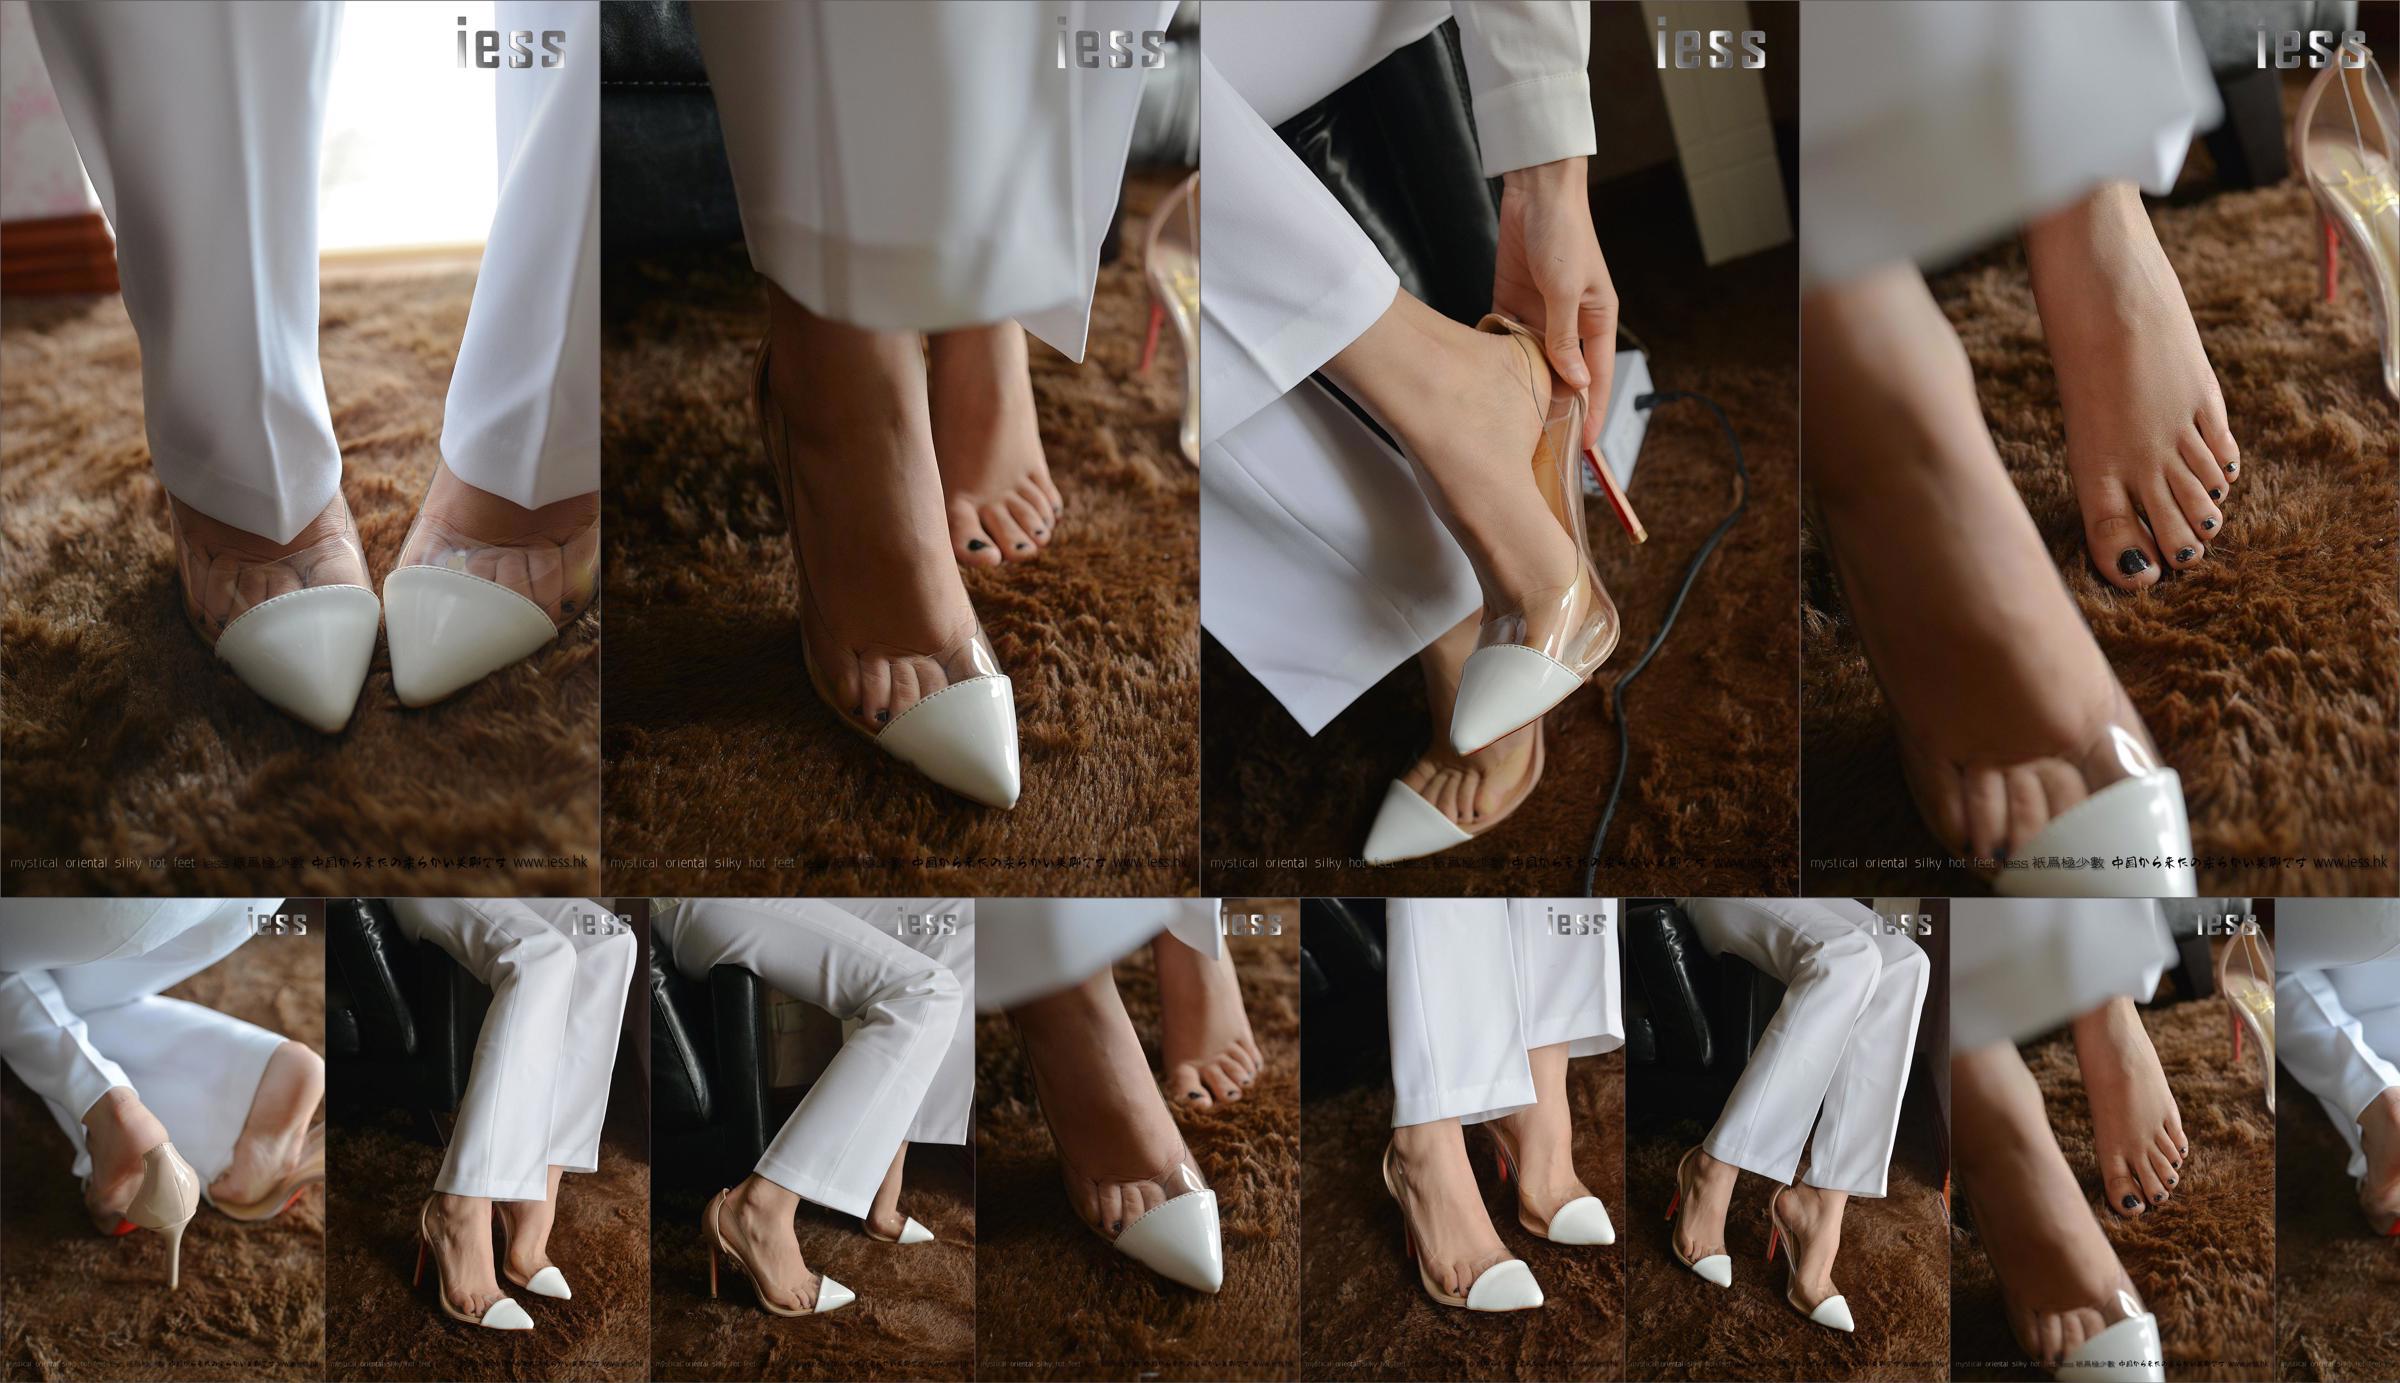 Silky Foot Bento 058 Suspense "Collection-Bare Foot High Heels" [IESS Wei Si Fun Xiang] No.e5e24c Page 5